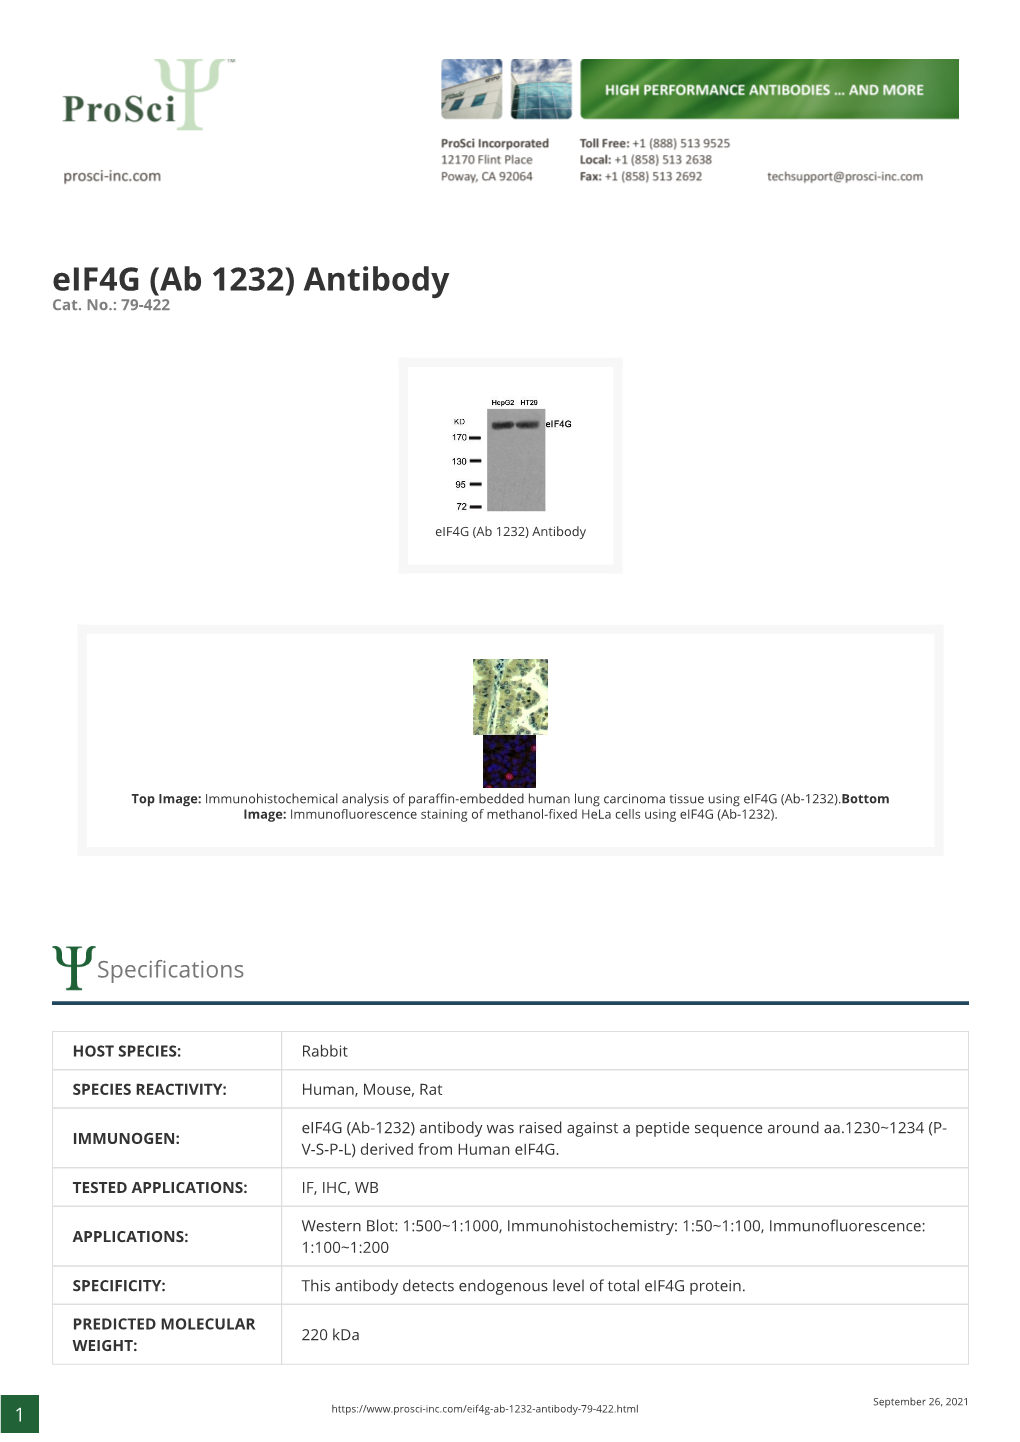 Eif4g (Ab 1232) Antibody Cat